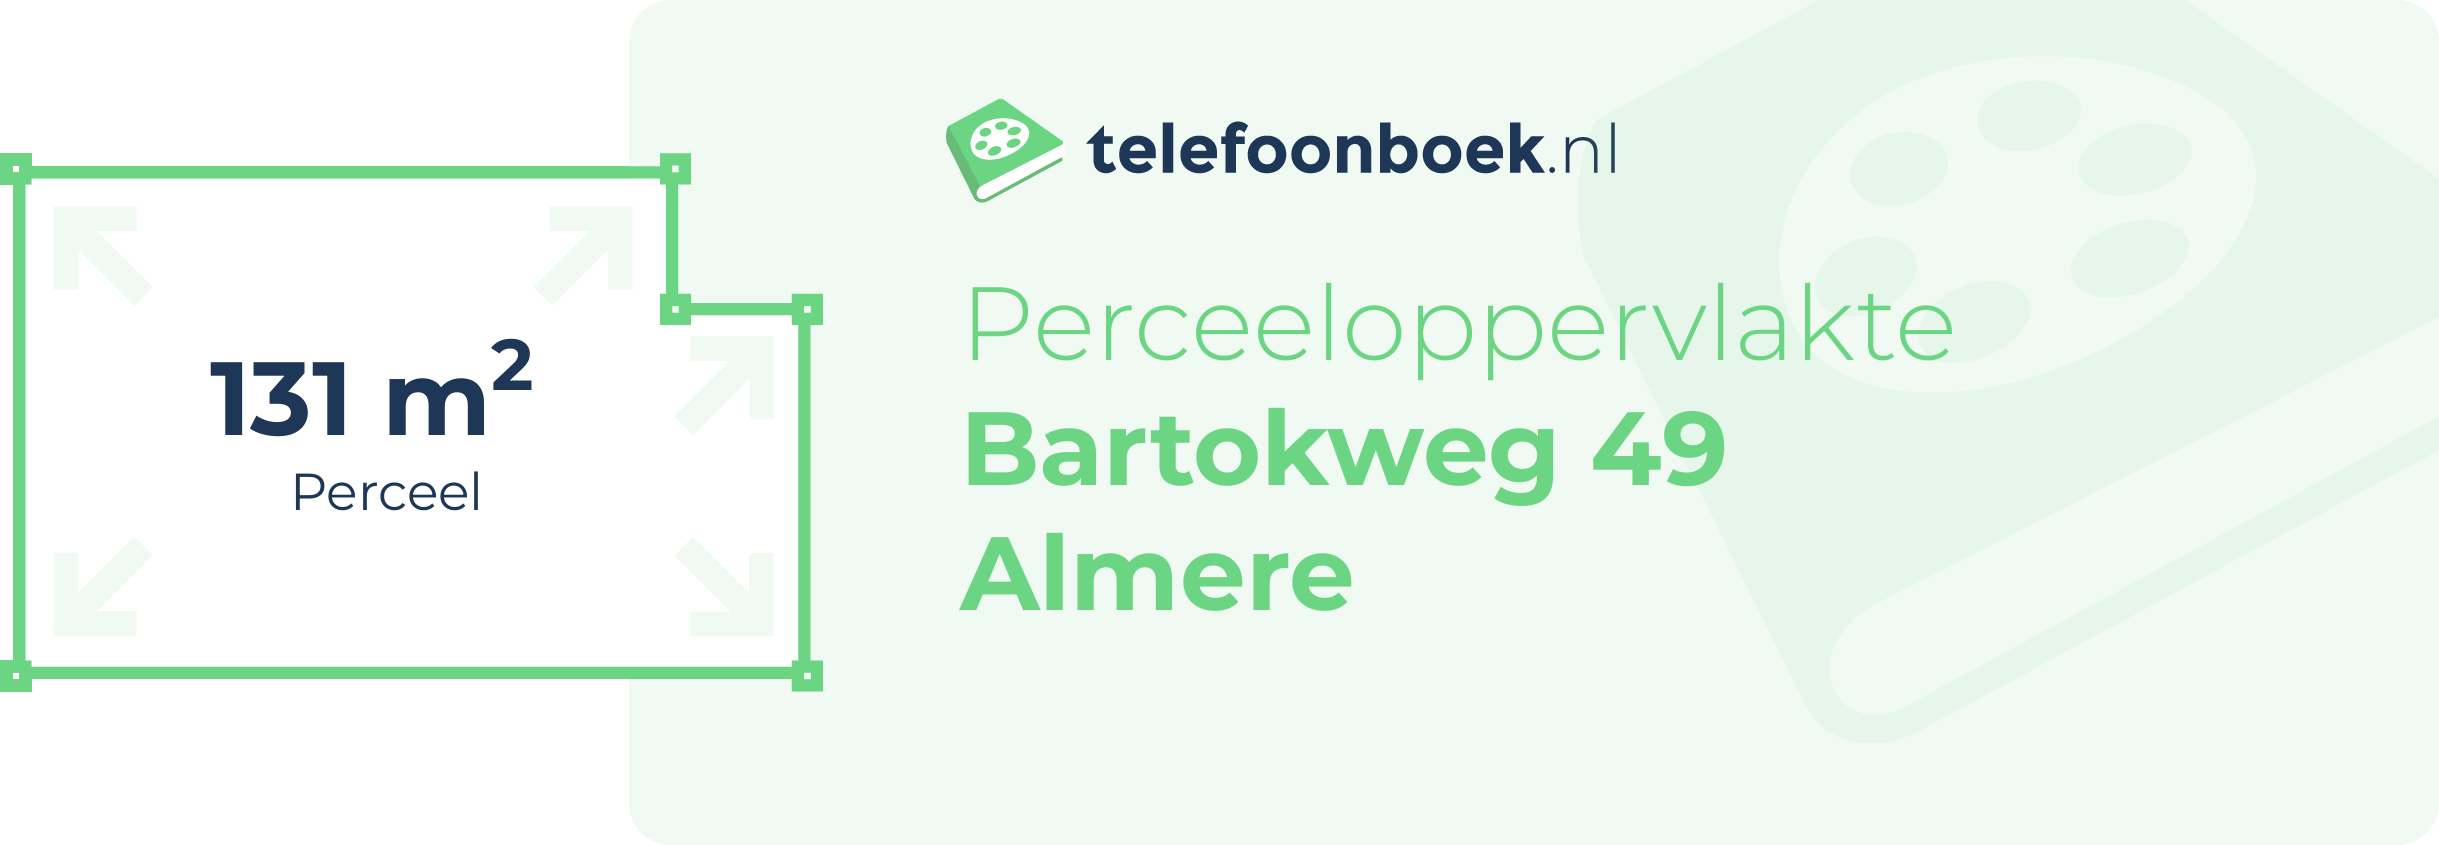 Perceeloppervlakte Bartokweg 49 Almere